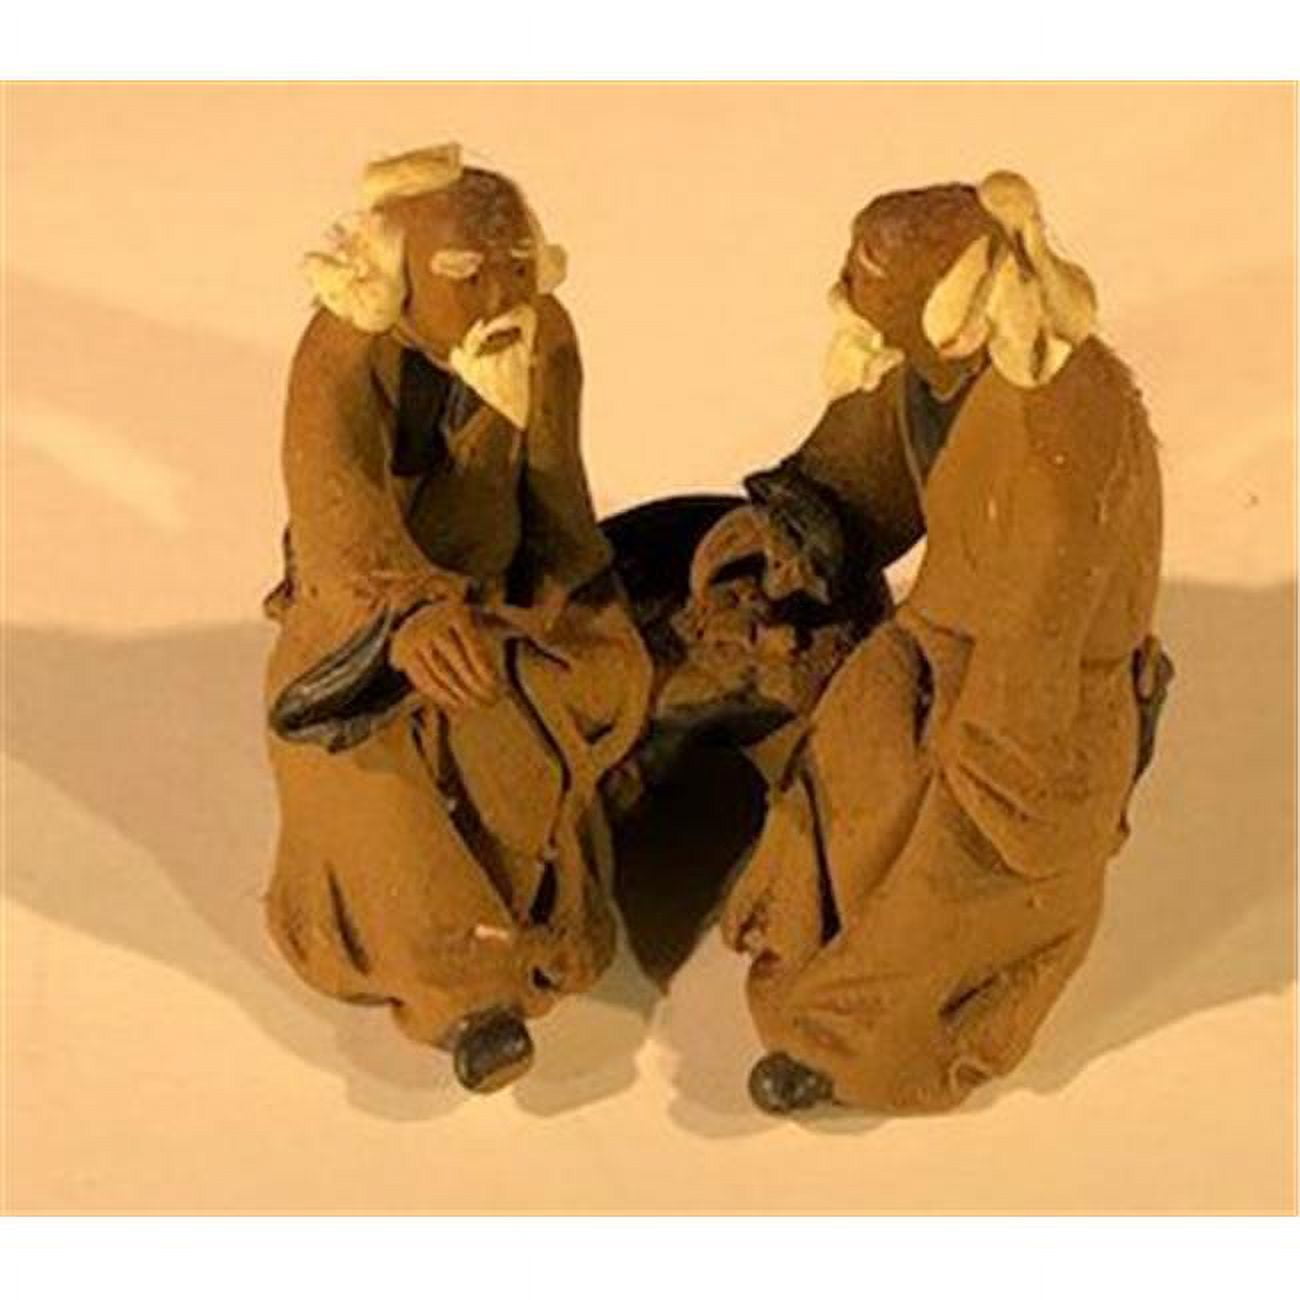 Picture of Bonsai Boy e3409 2 in. Miniature Ceramic Figurine - Two Men Sitting On Bench